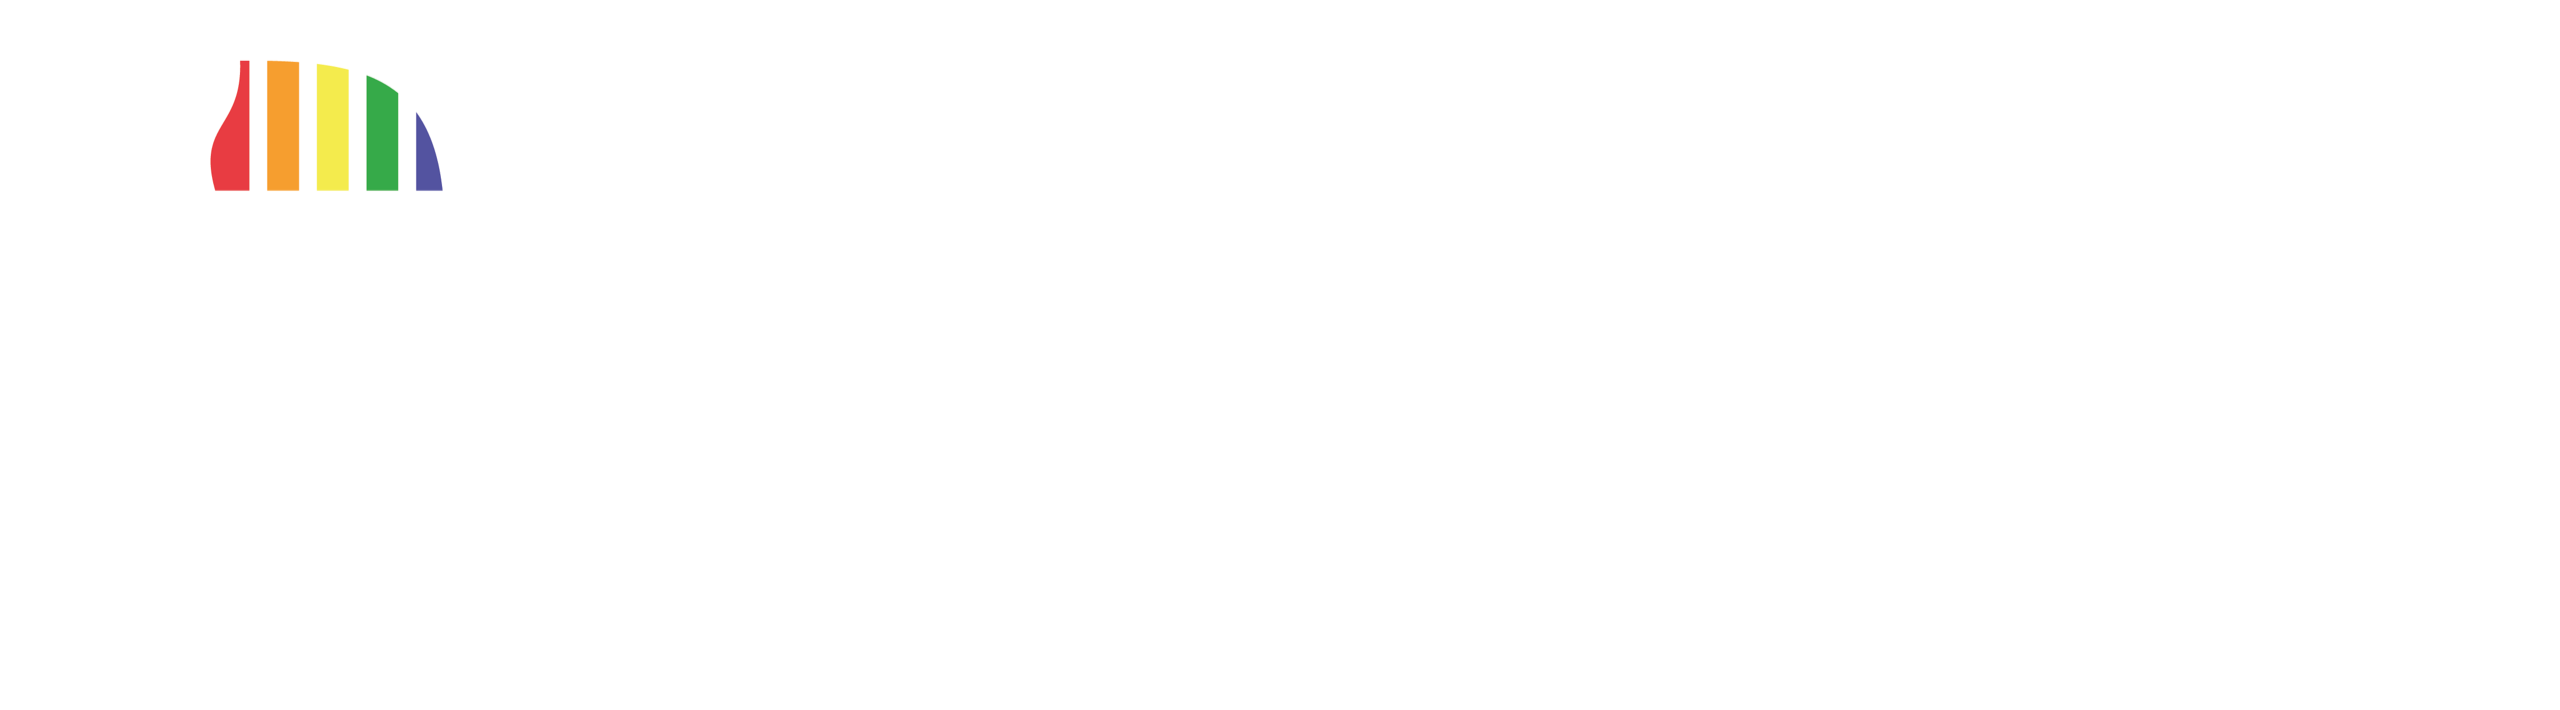 Jungle Gayborhood